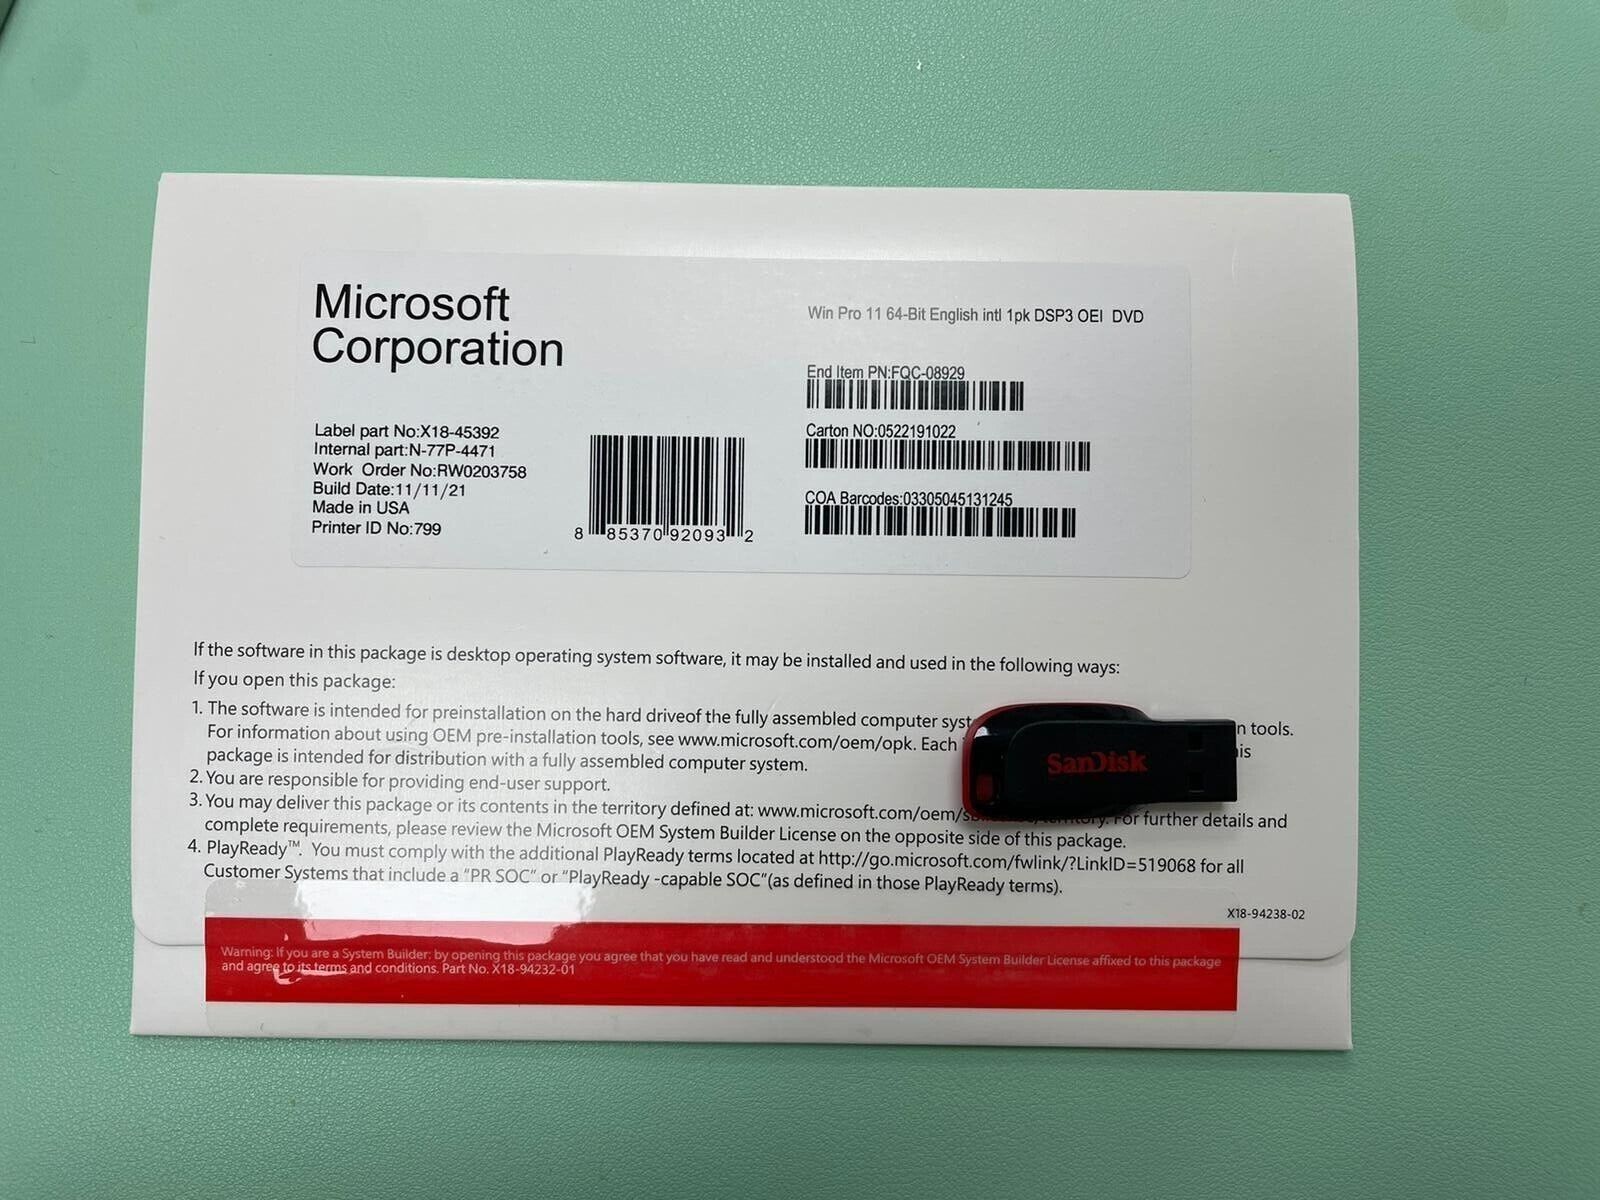 16GB USB Flash Drive with Microsoft Windows 11 Pro 64-bit OEI DVD - English 